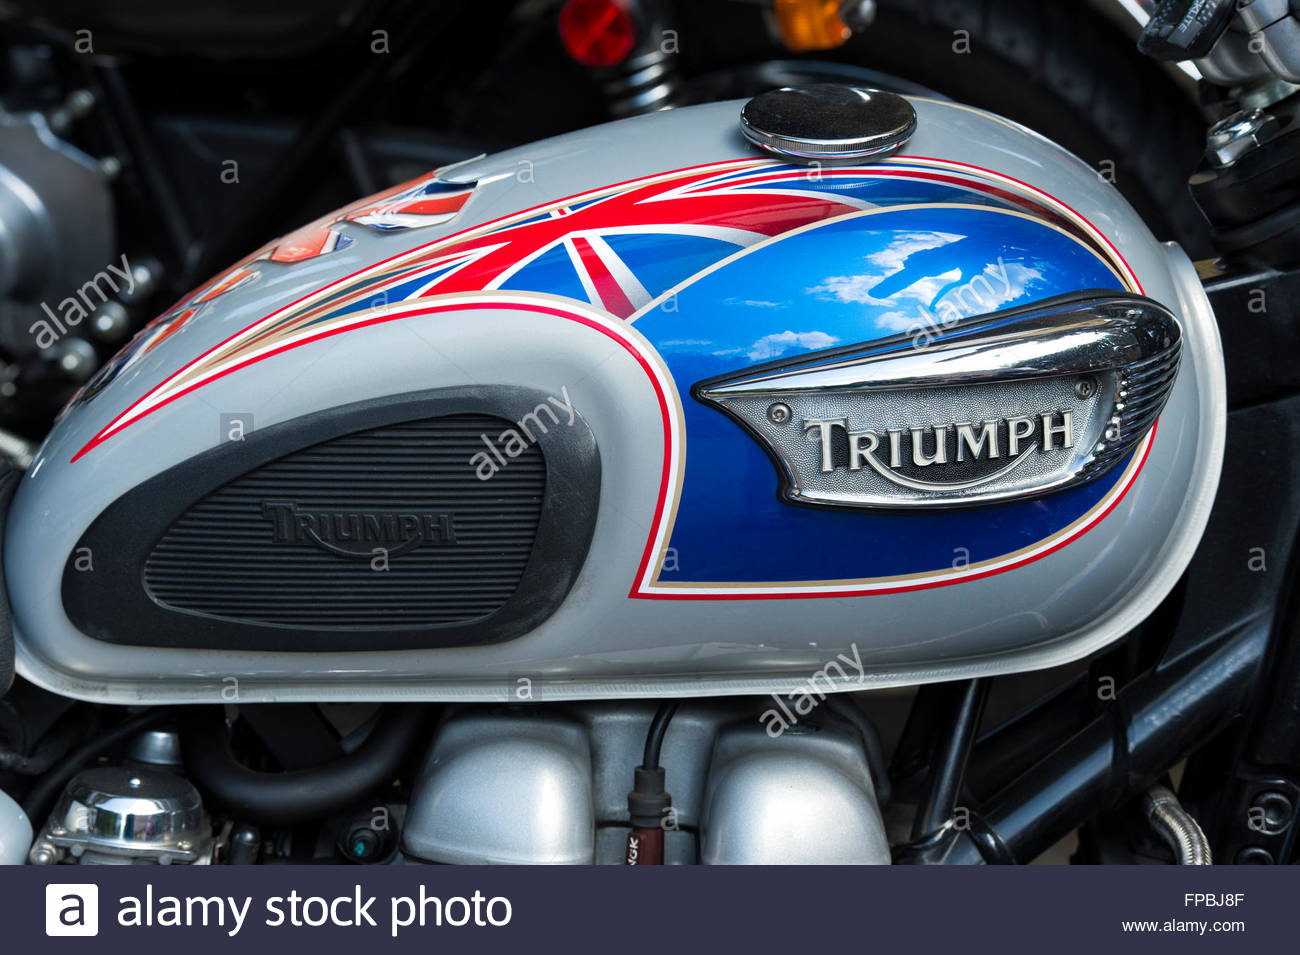 triumph-motorcycle-union-jack-petrol-tank-classic-british-motorcycle-FPBJ8F.jpg